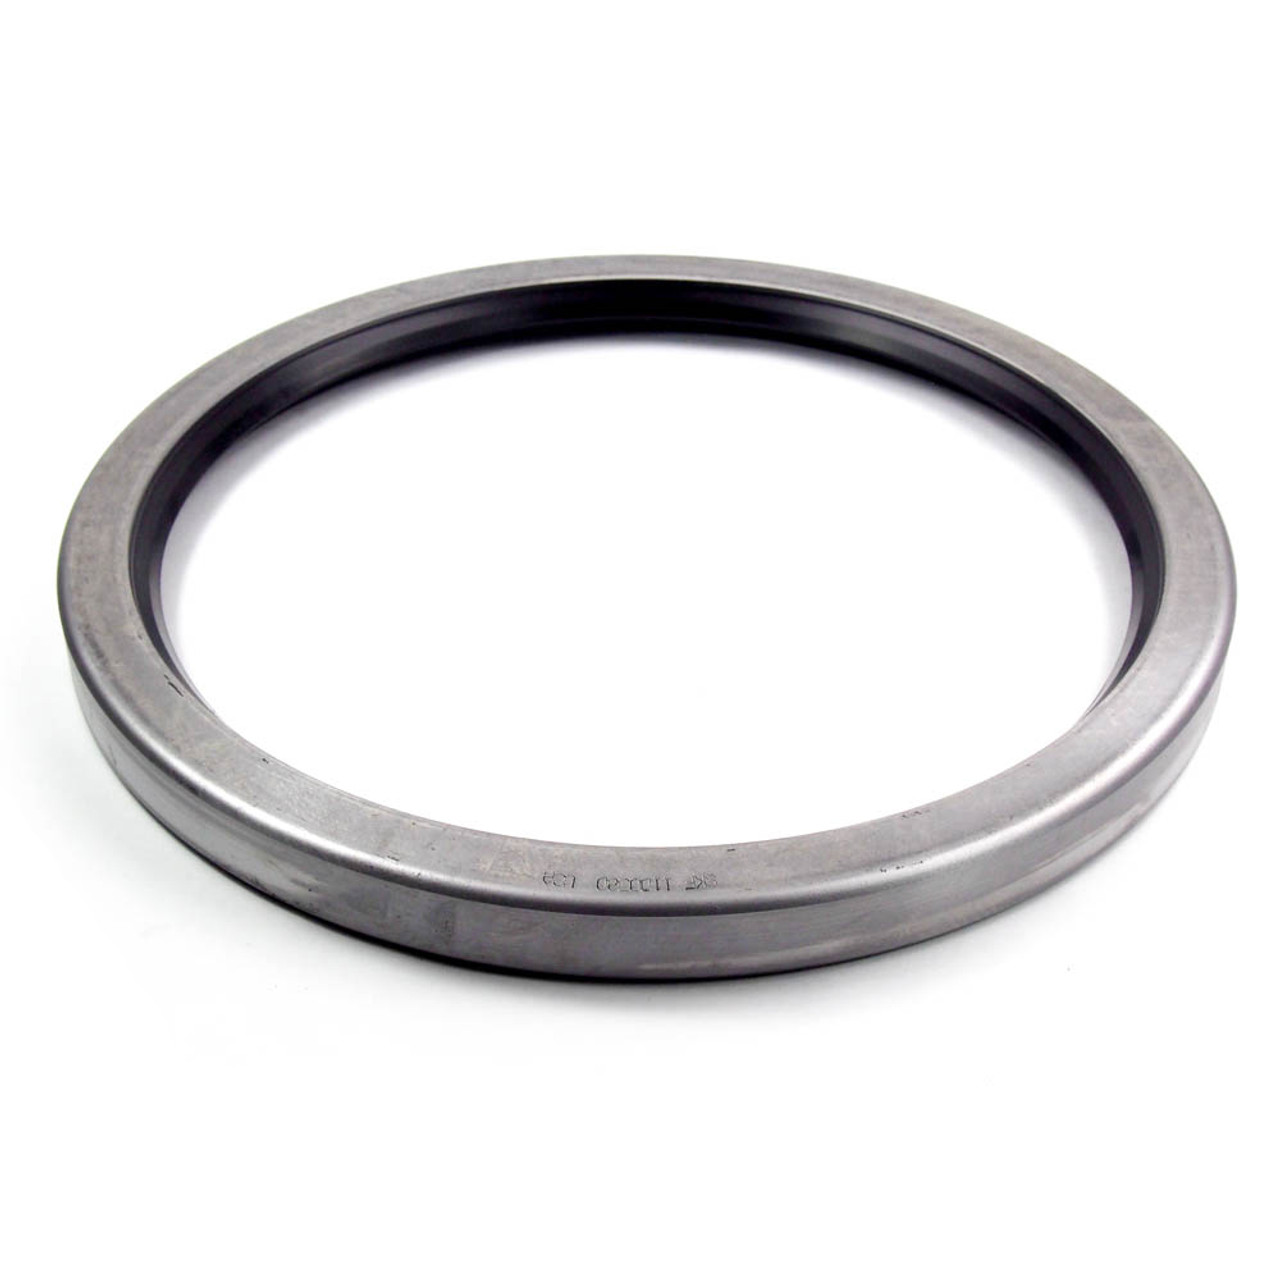 295mm (11.614") Metric H/D Metal Single Lip Viton Oil Seal  295X330X17.5 HDS1 V